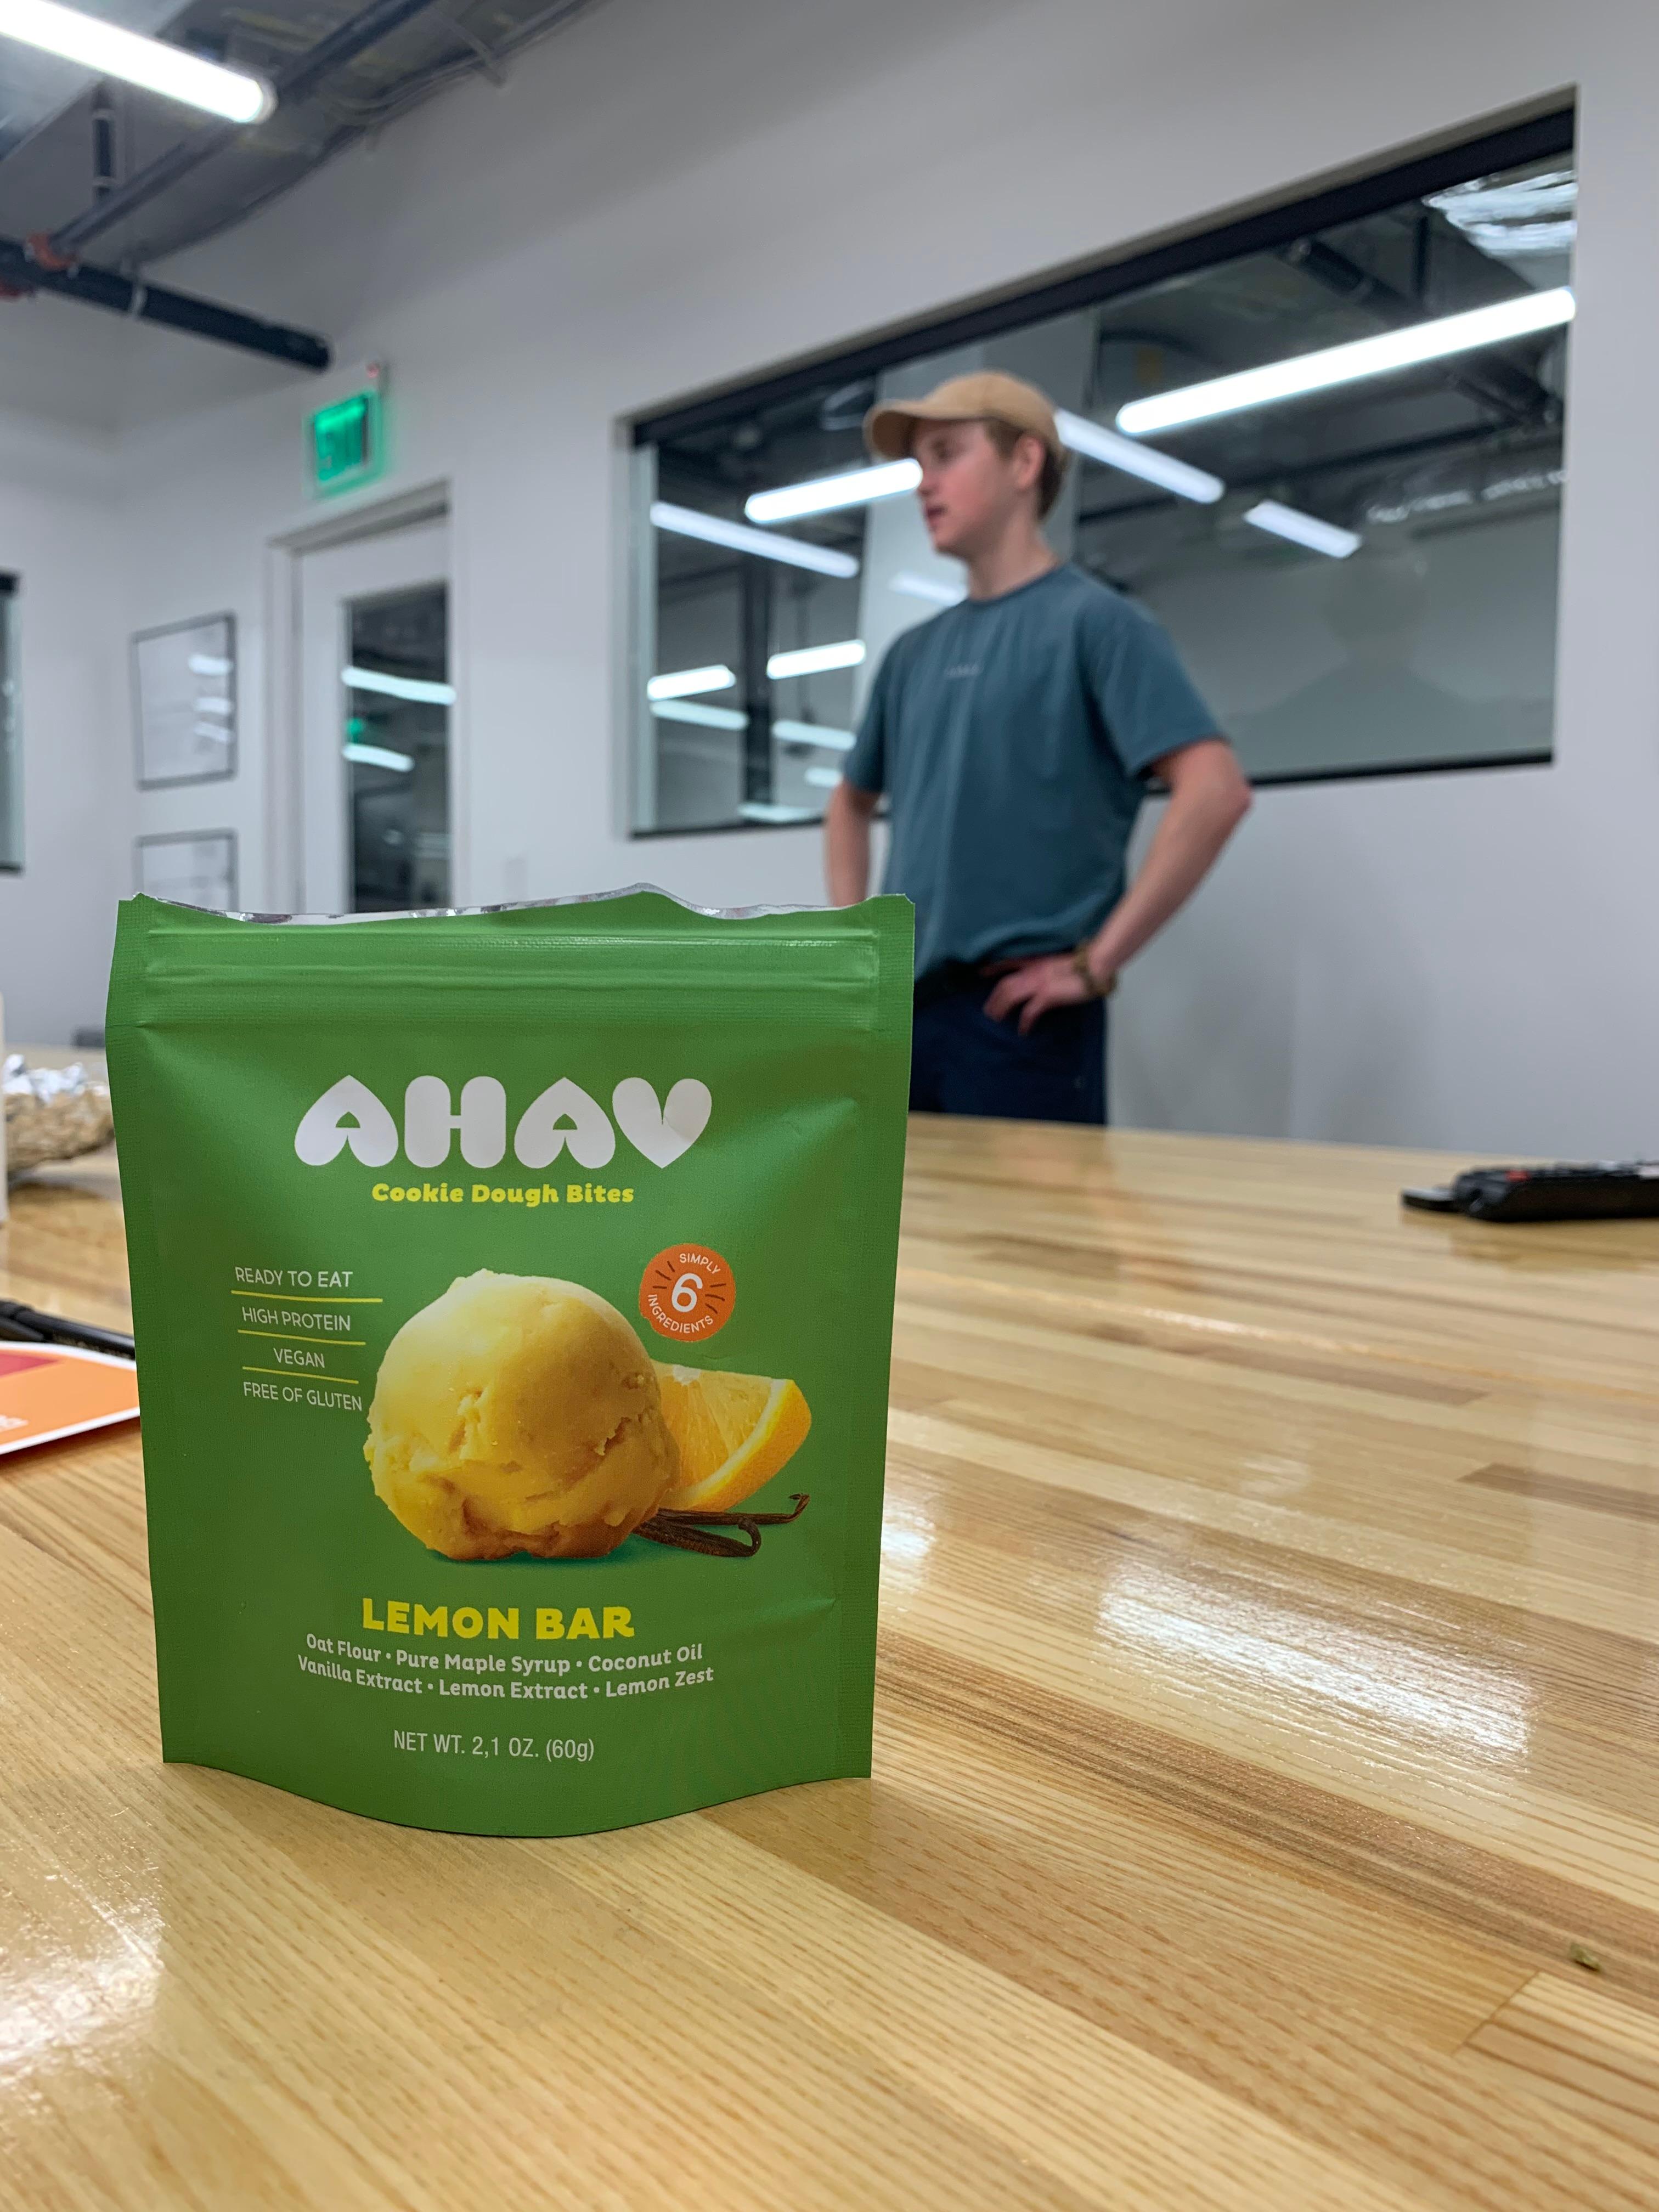 New Flavor Who Dis?! Ahav Launches New Lemon Bar Flavor!